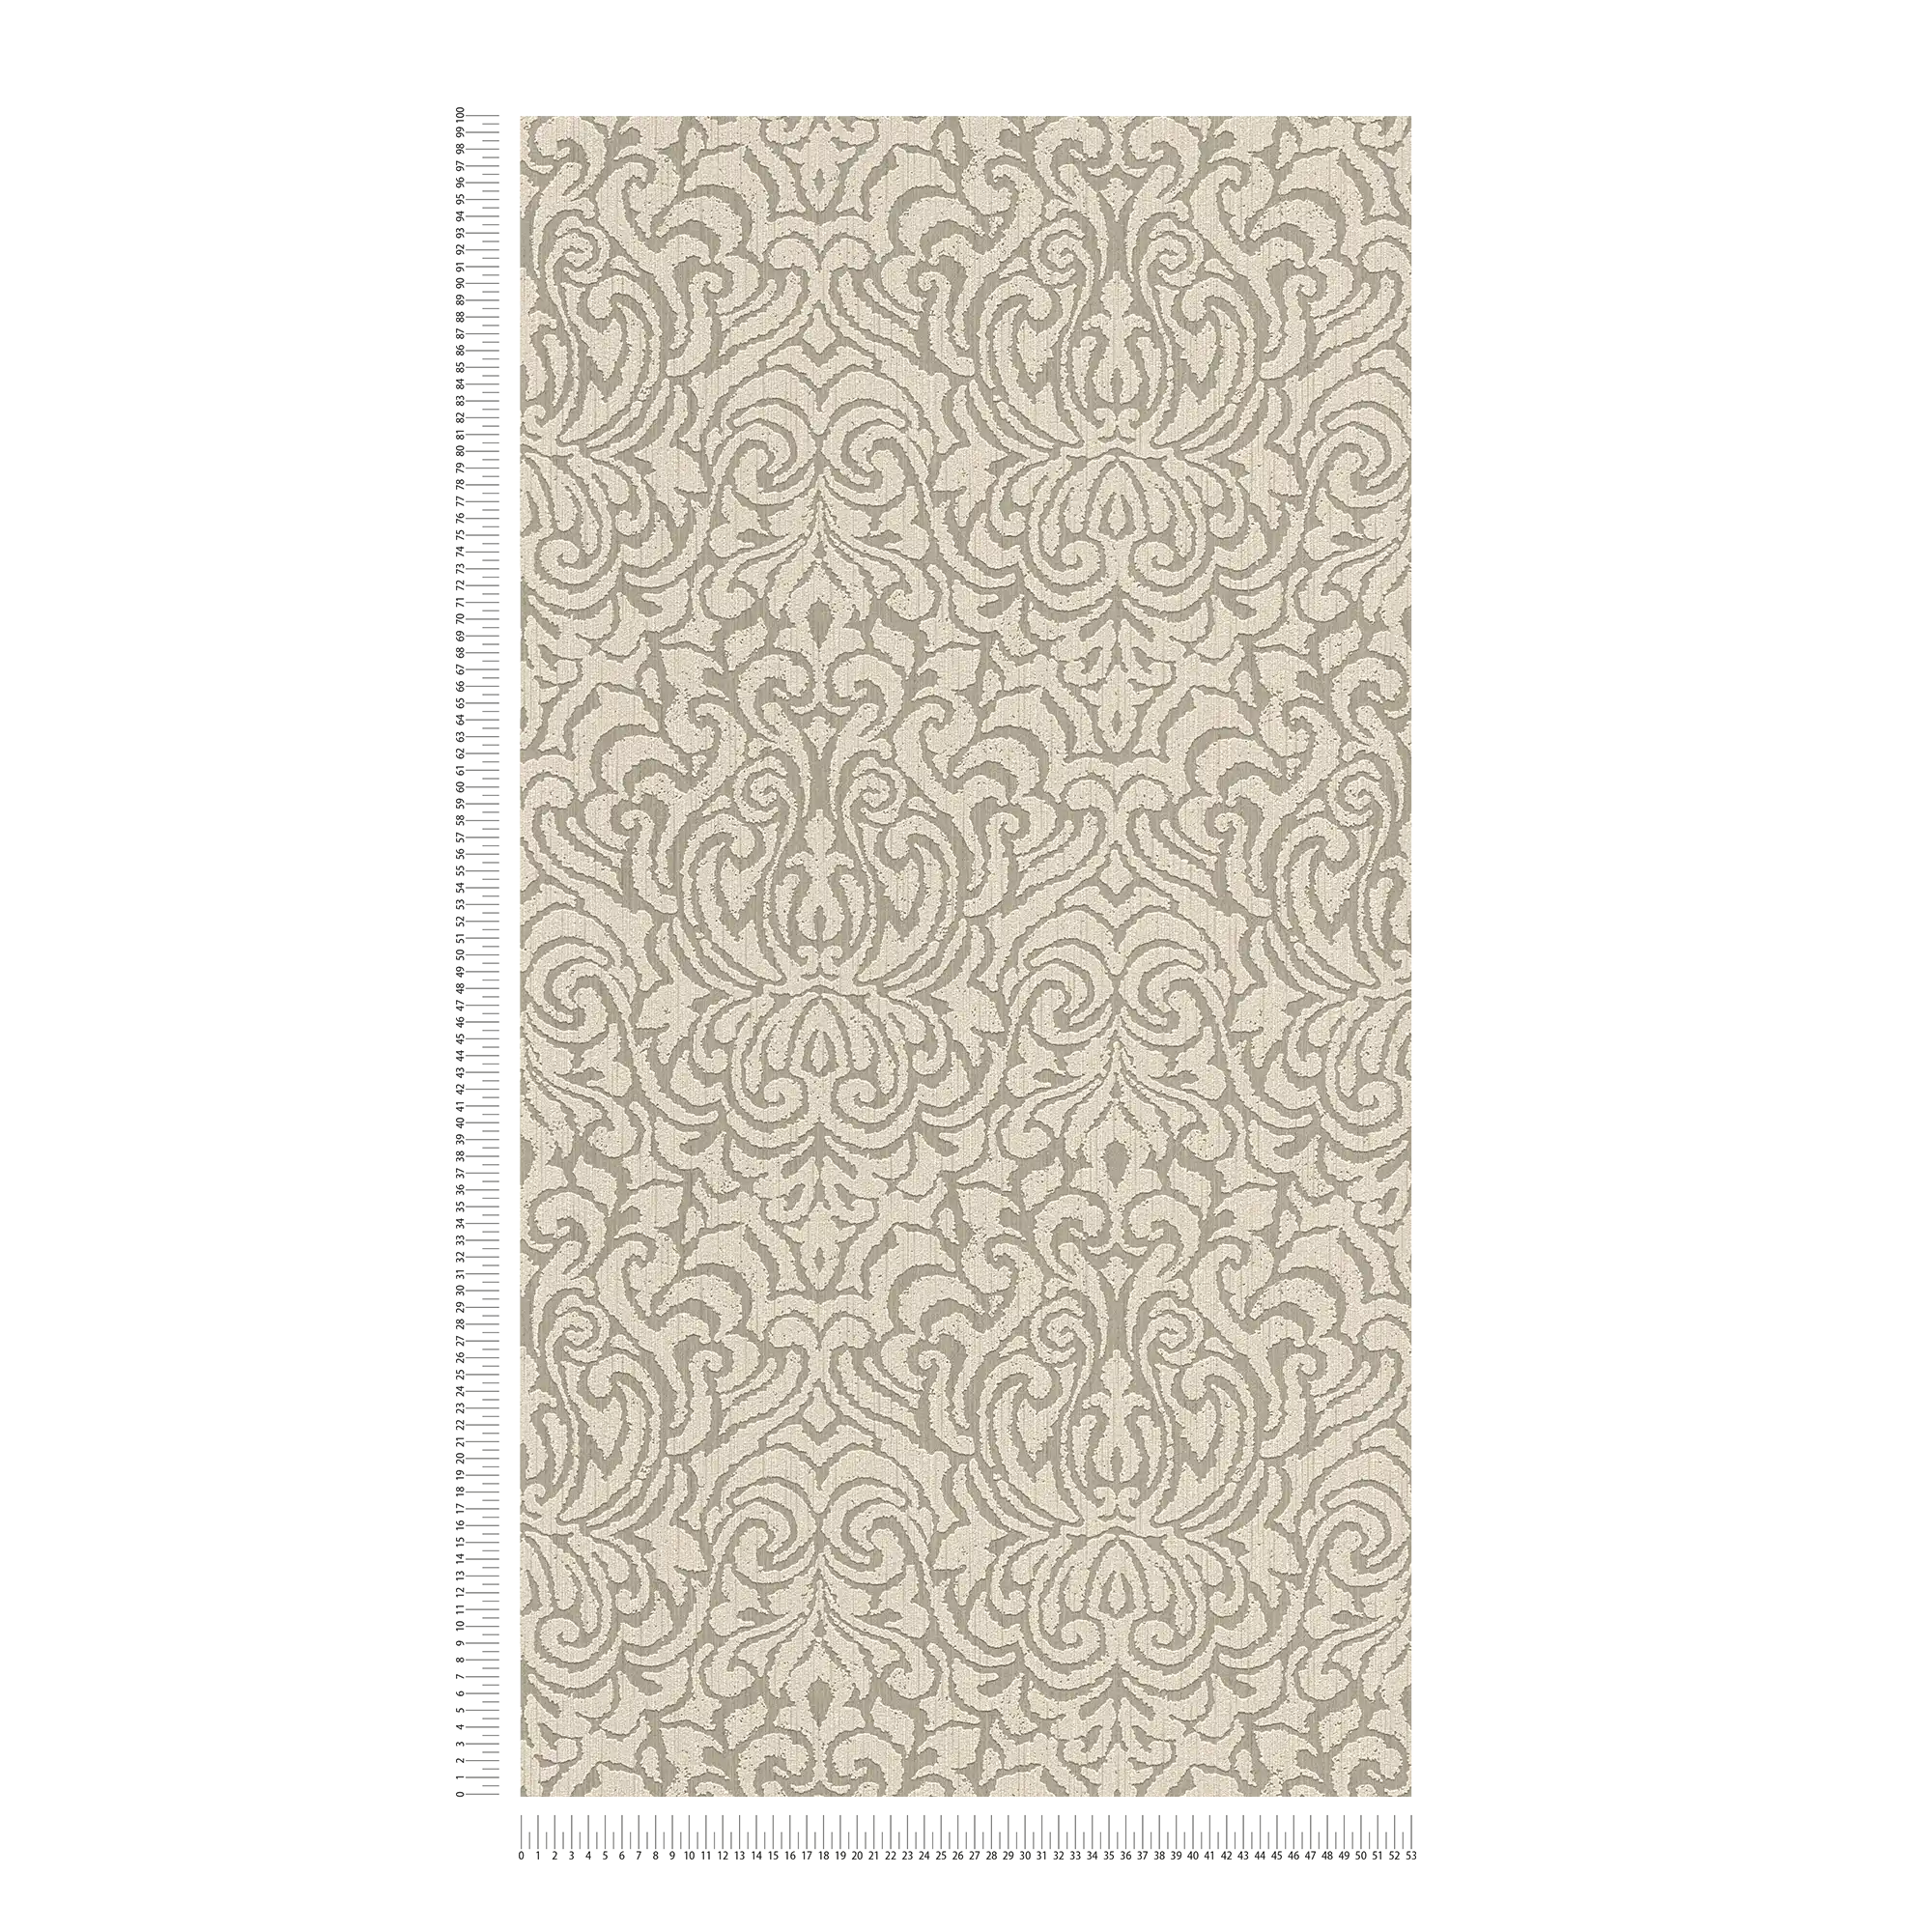             adornos de papel pintado en aspecto usado con efecto de textura - beige, marrón
        